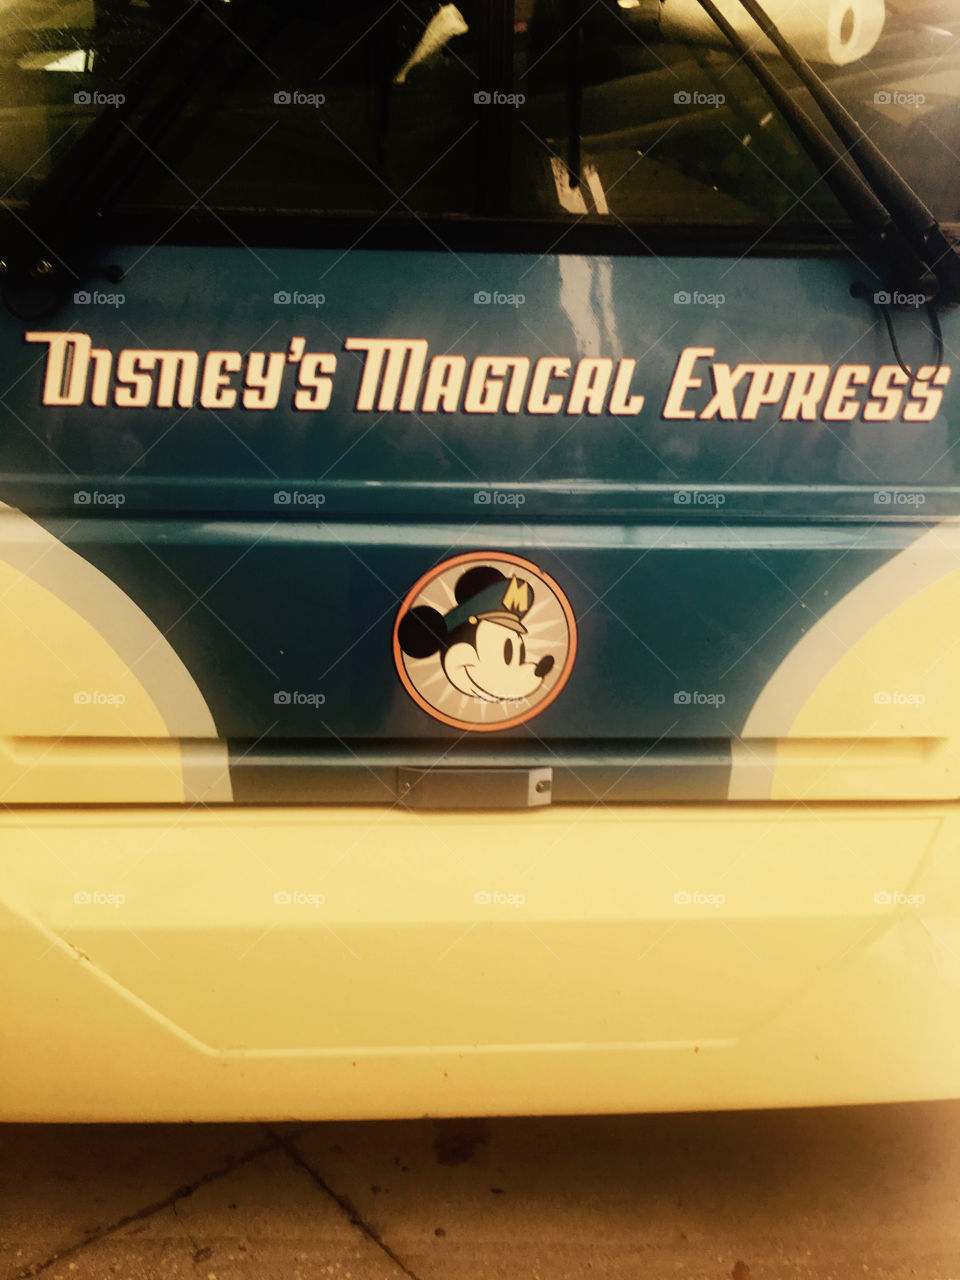 Mickeys magical express